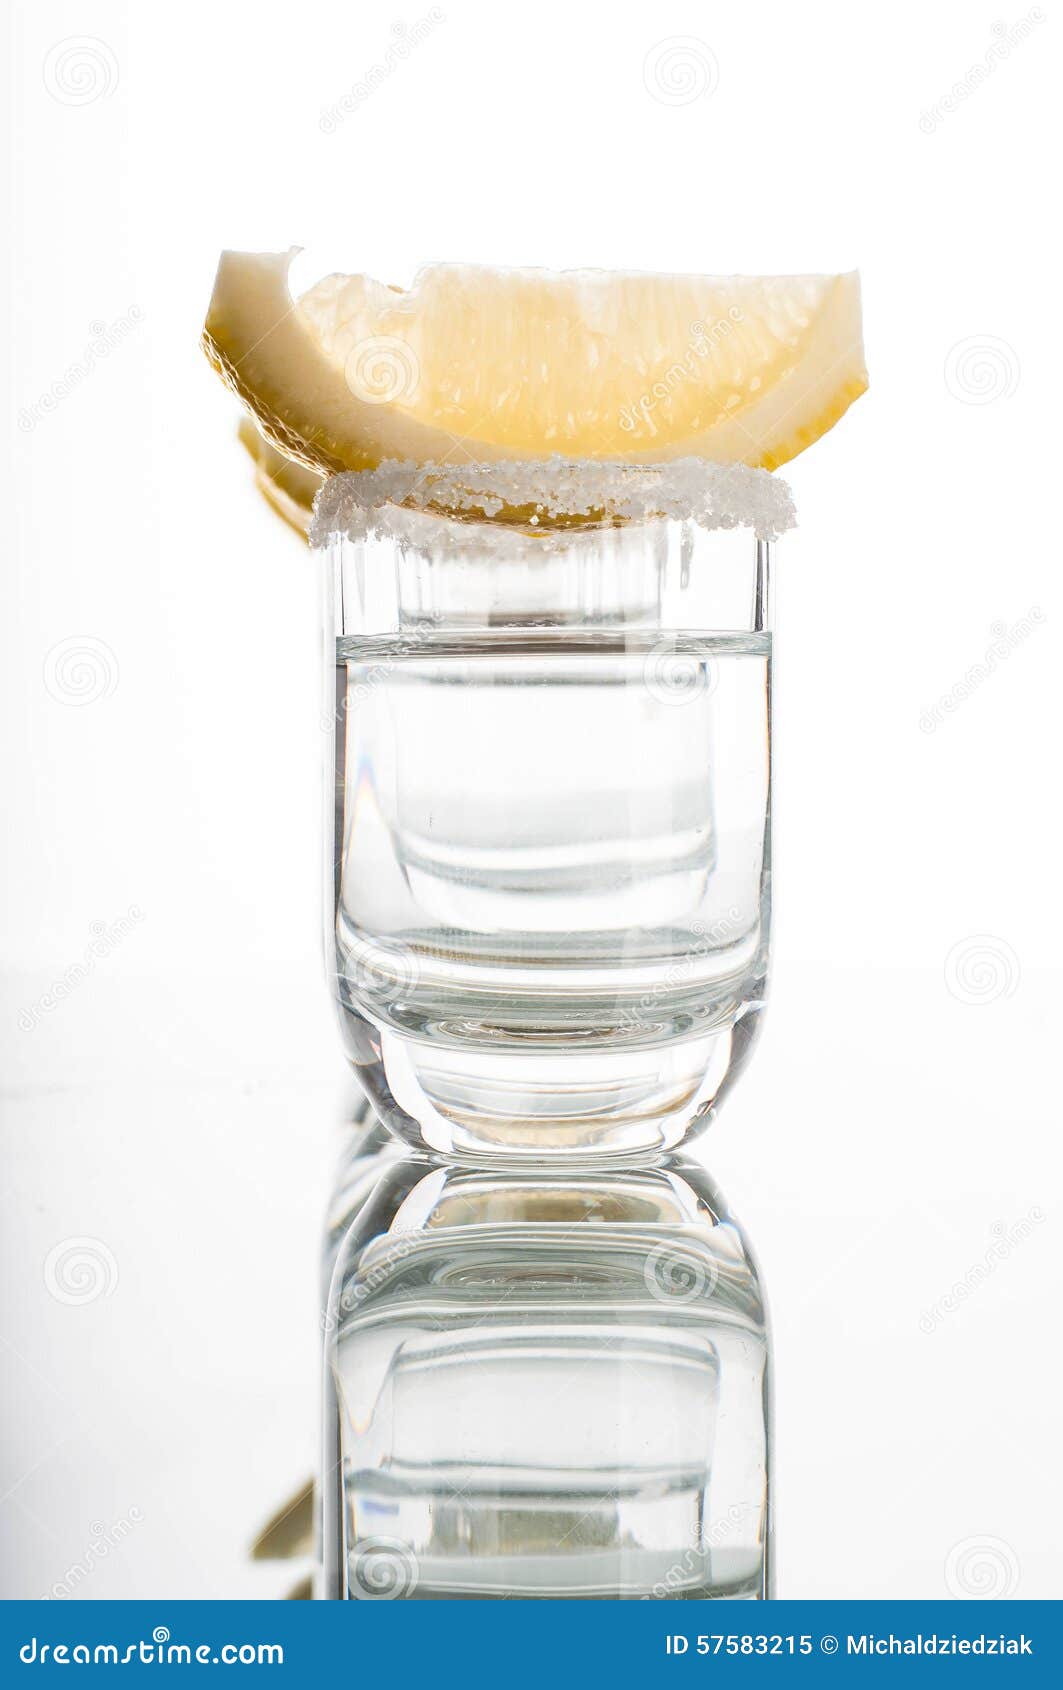 Photo of four shots of vodka with lemon